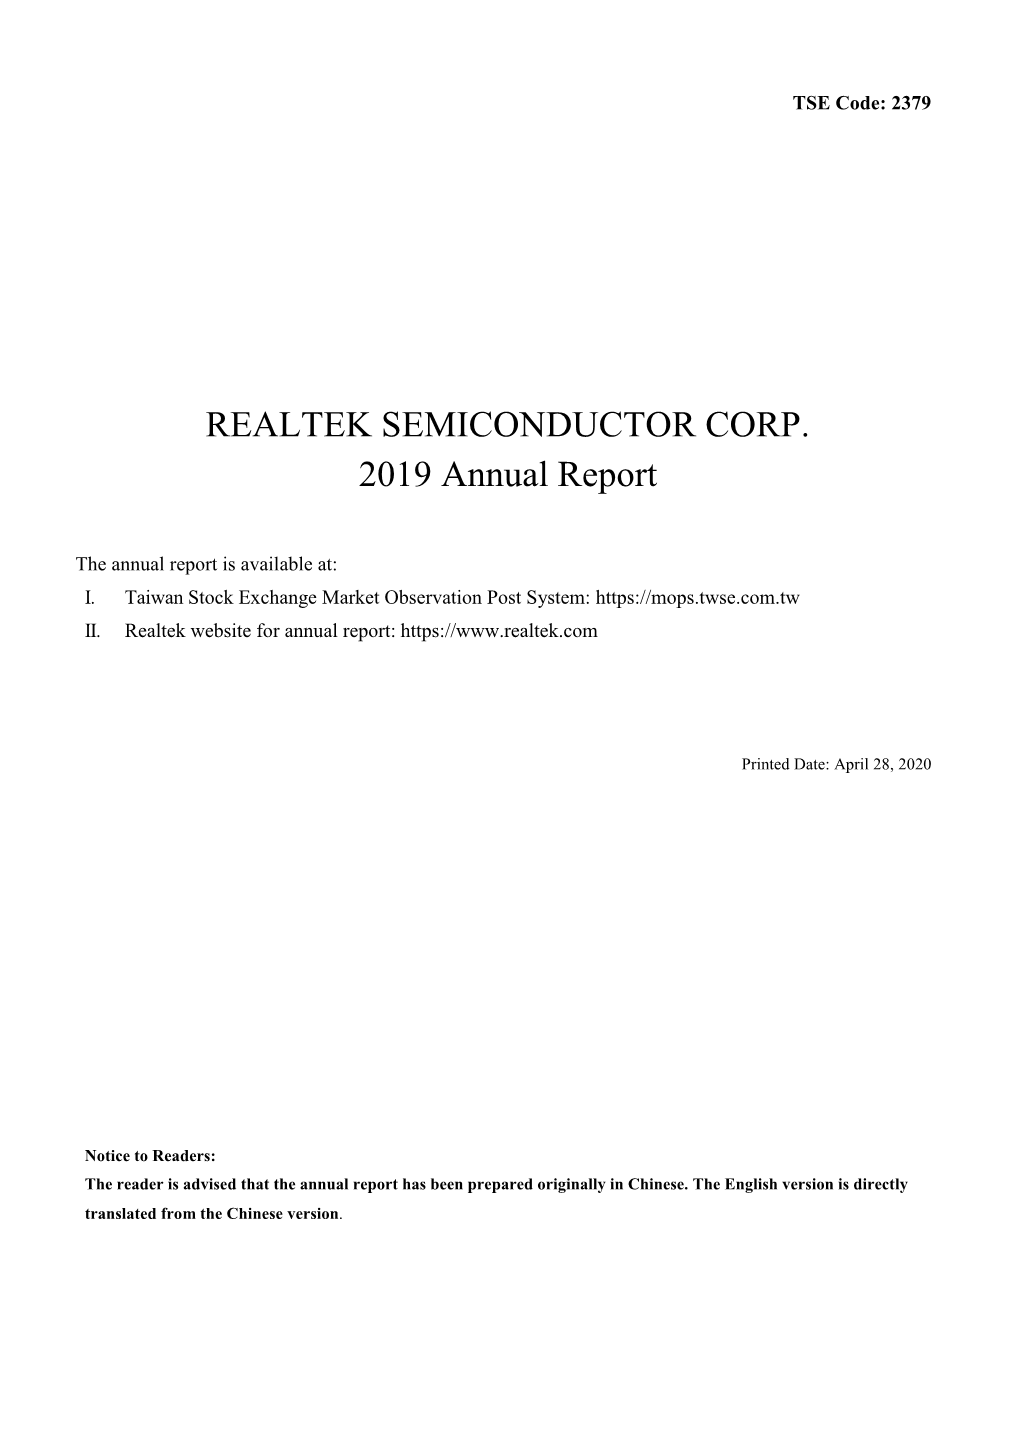 REALTEK SEMICONDUCTOR CORP. 2019 Annual Report